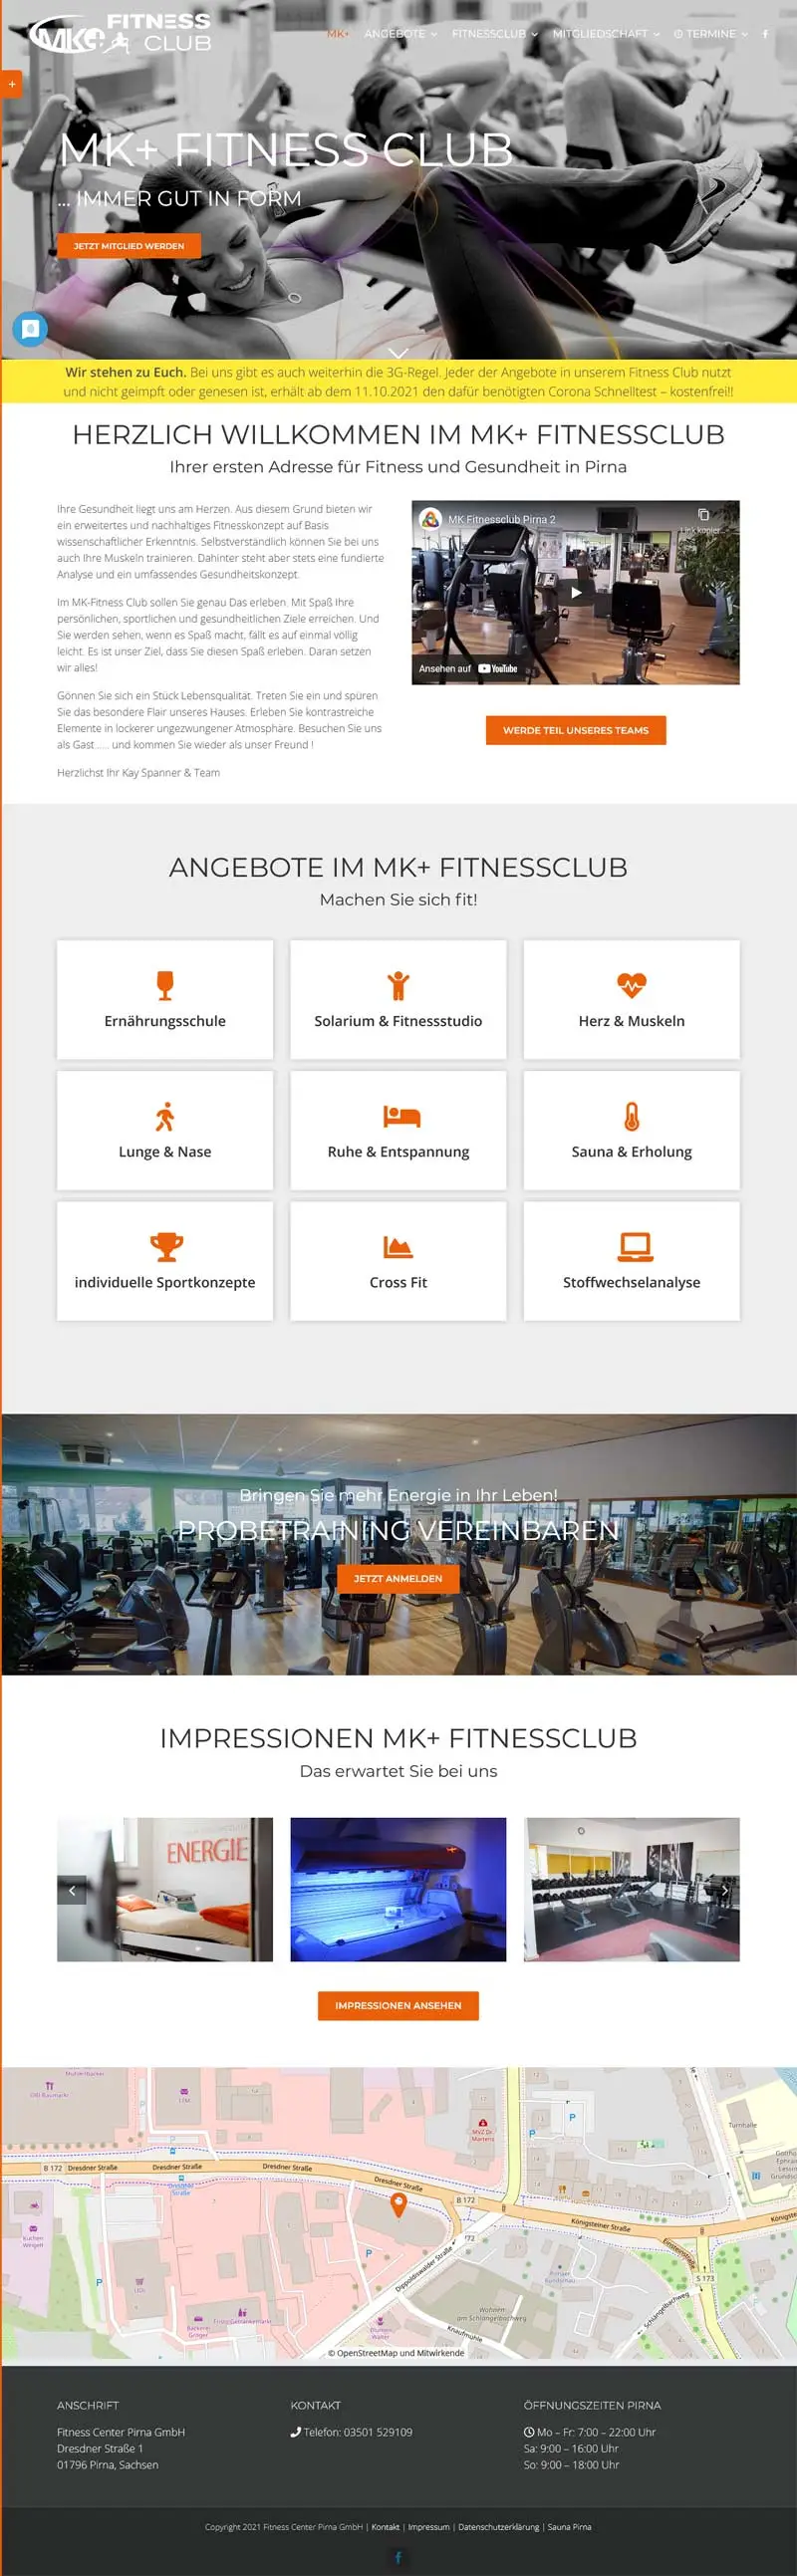 MK Fitnessclub Pirna - Screenshot Fullsize Startseite